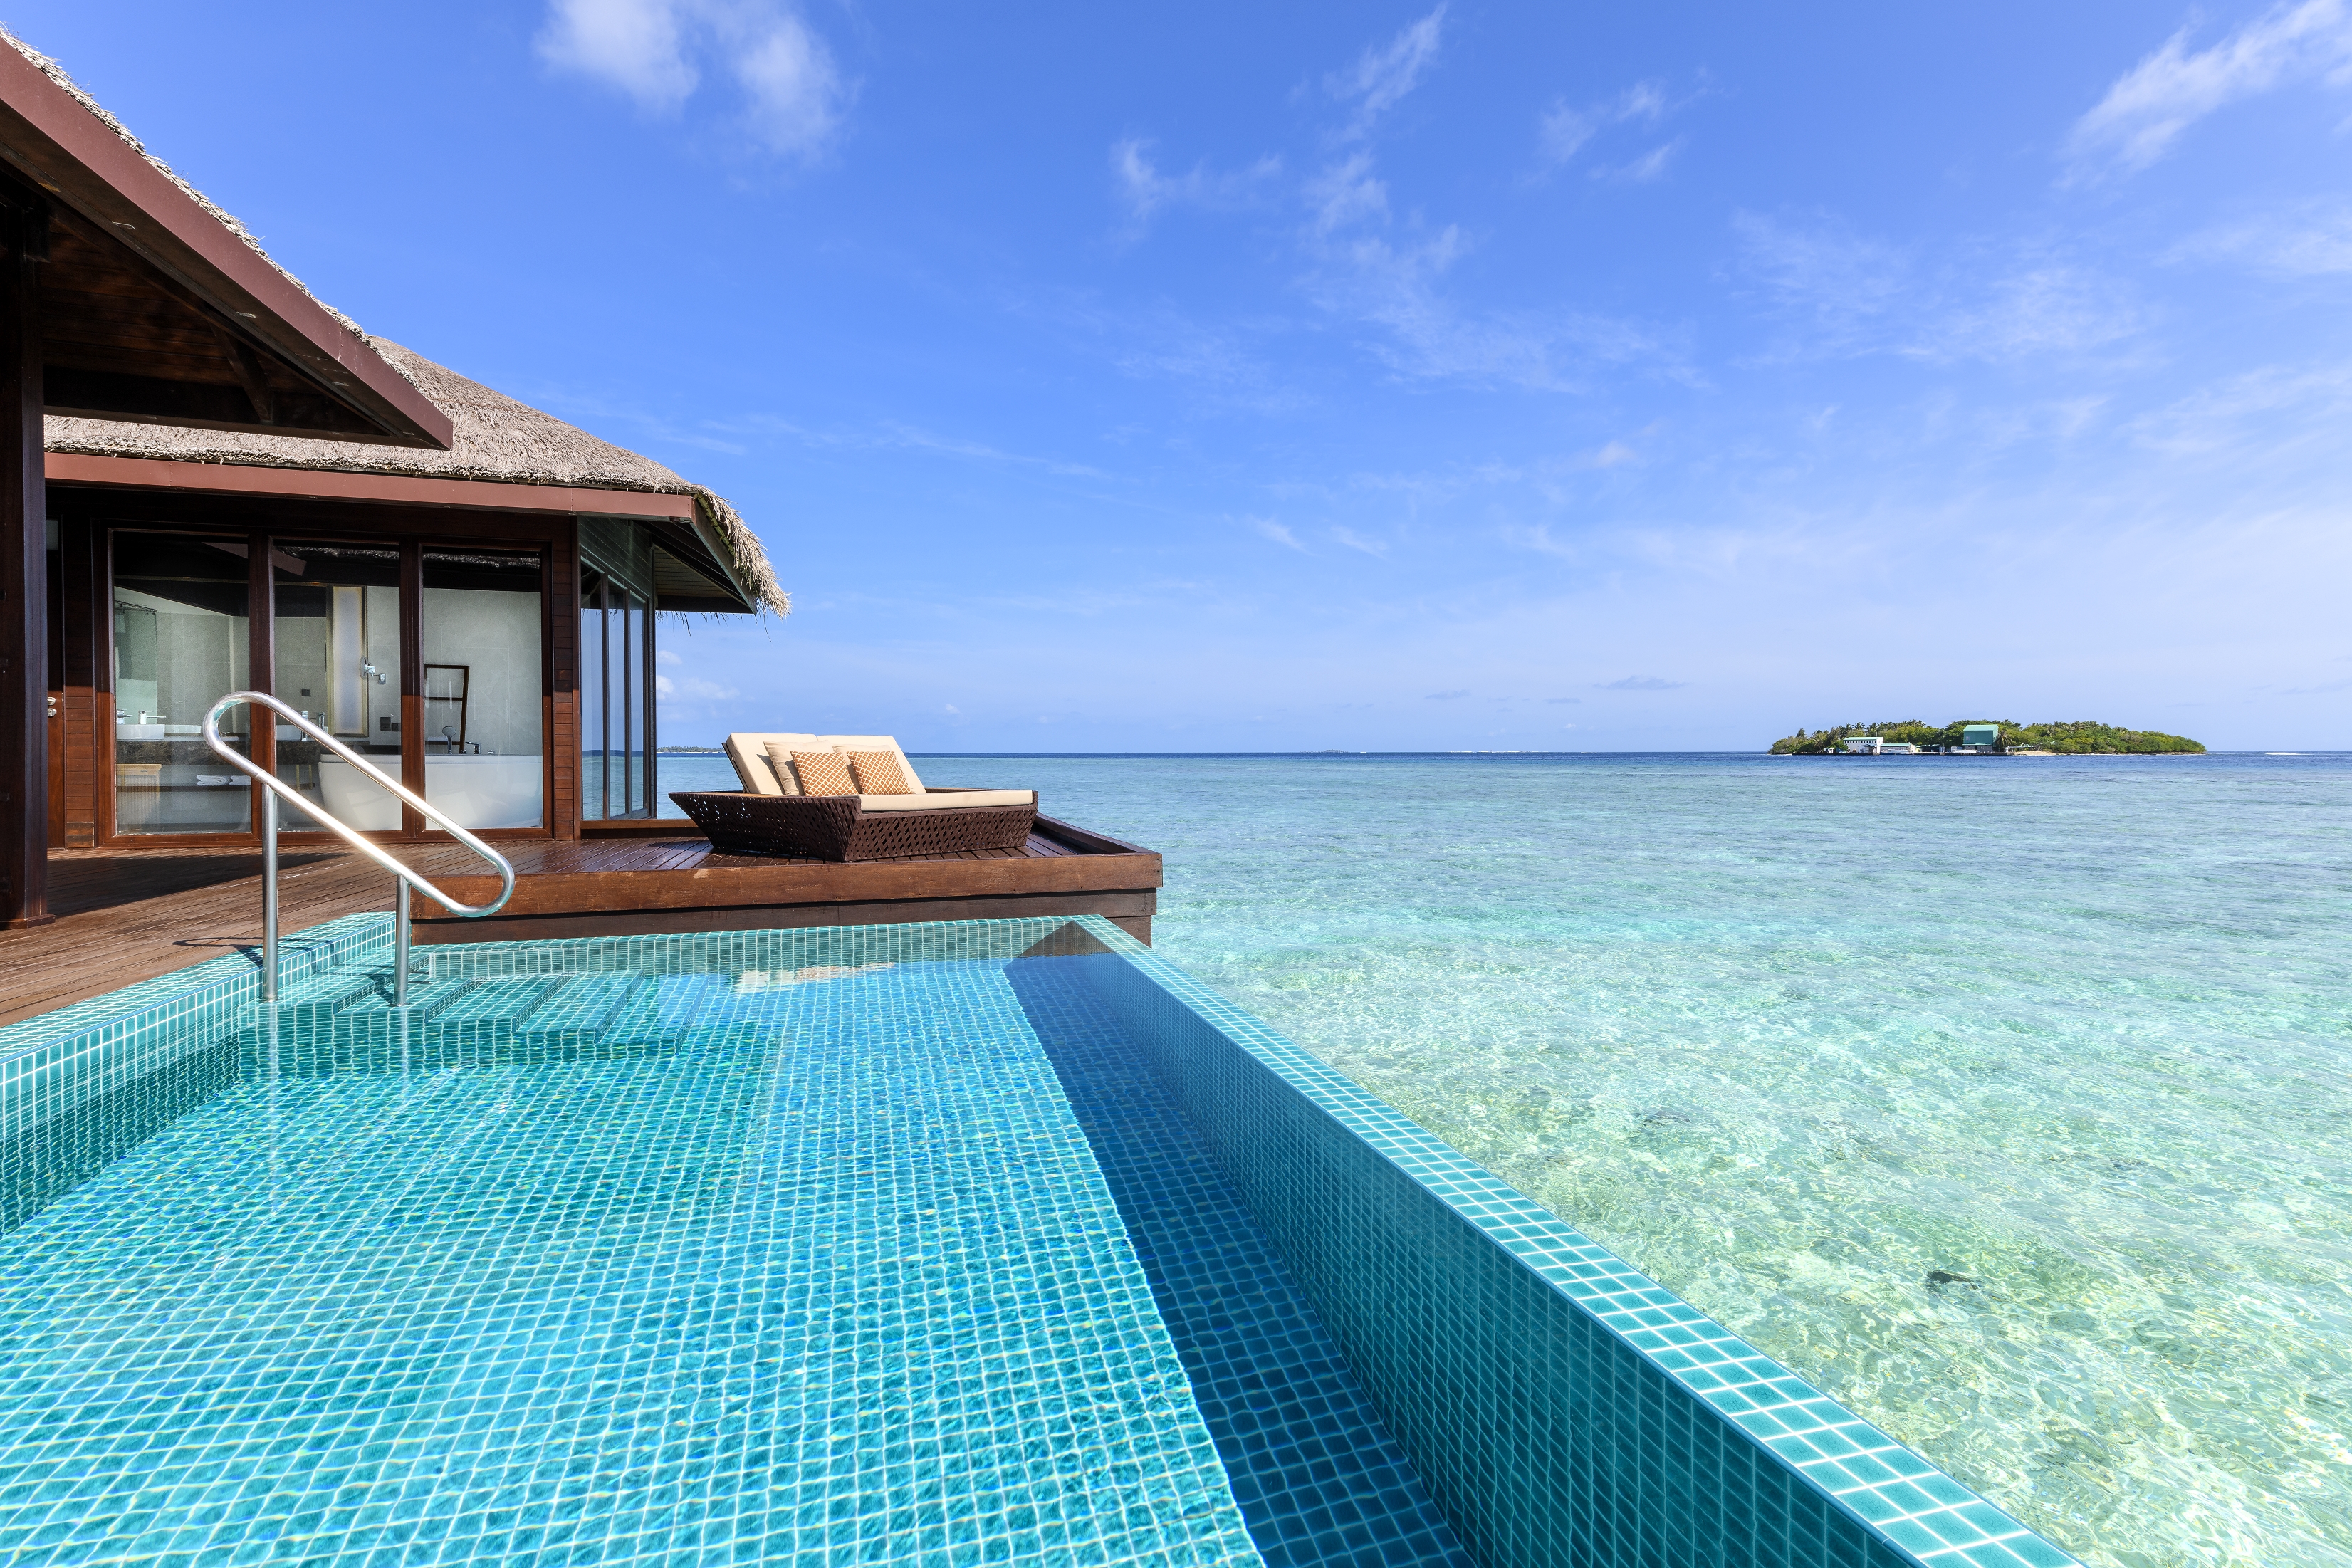 Sheraton Maldives Full Moon Resort & Spa - Two-bedroom Suite, Pool - PR by uschi liebl pr